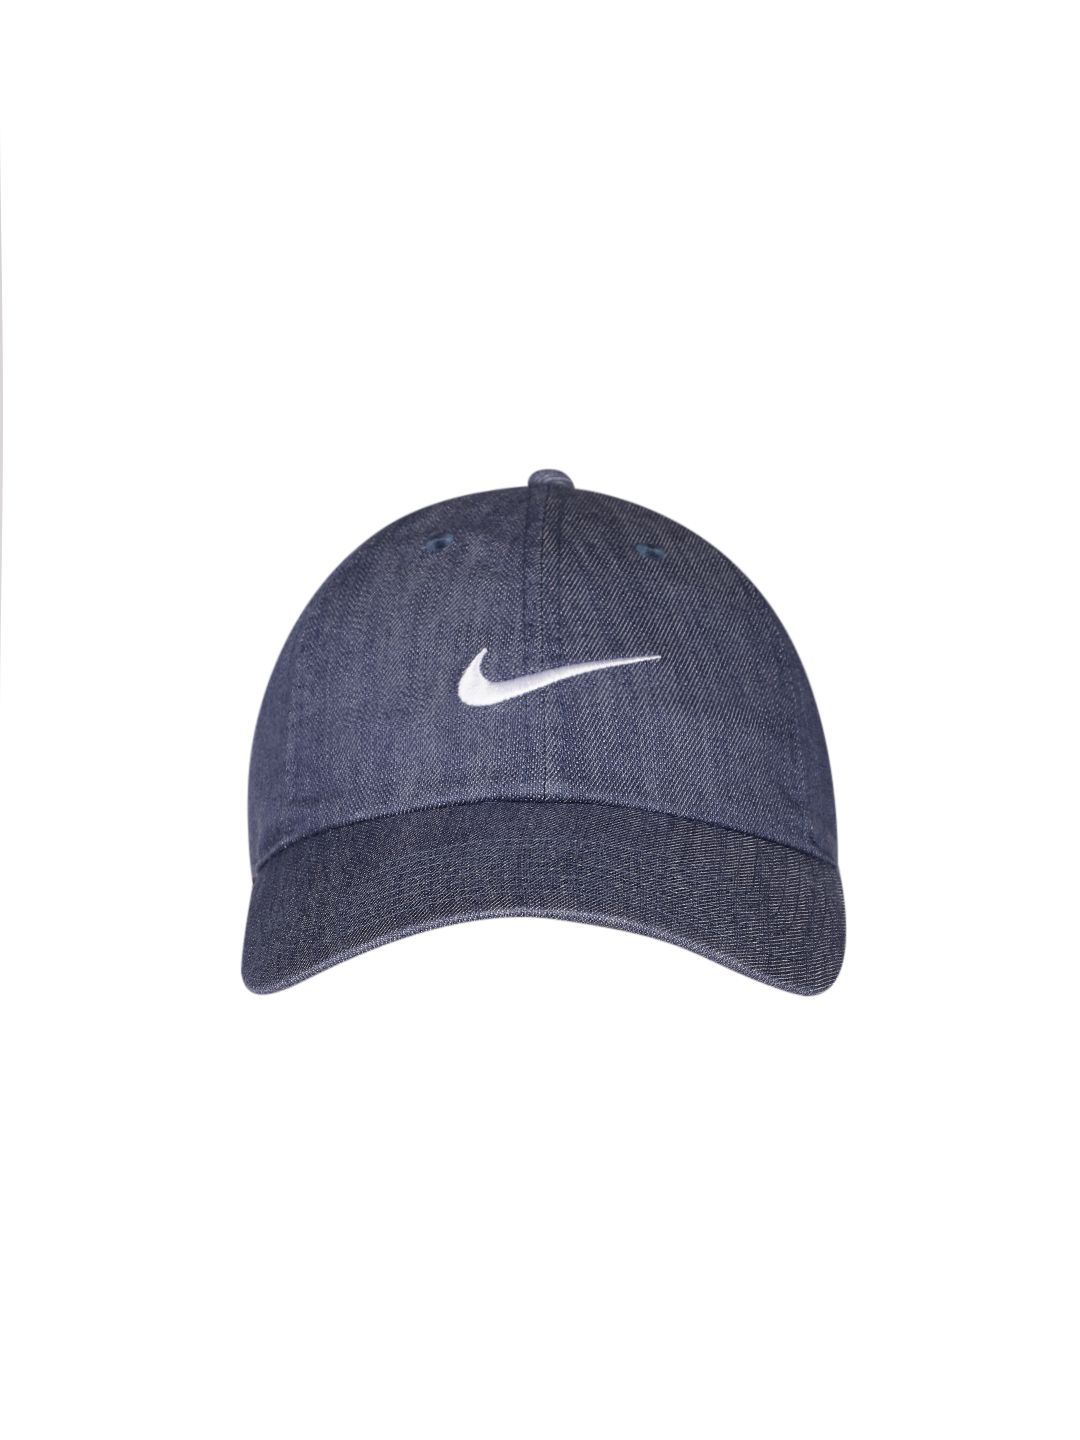 Nike Unisex Blue Solid Denim Baseball Cap Price in India